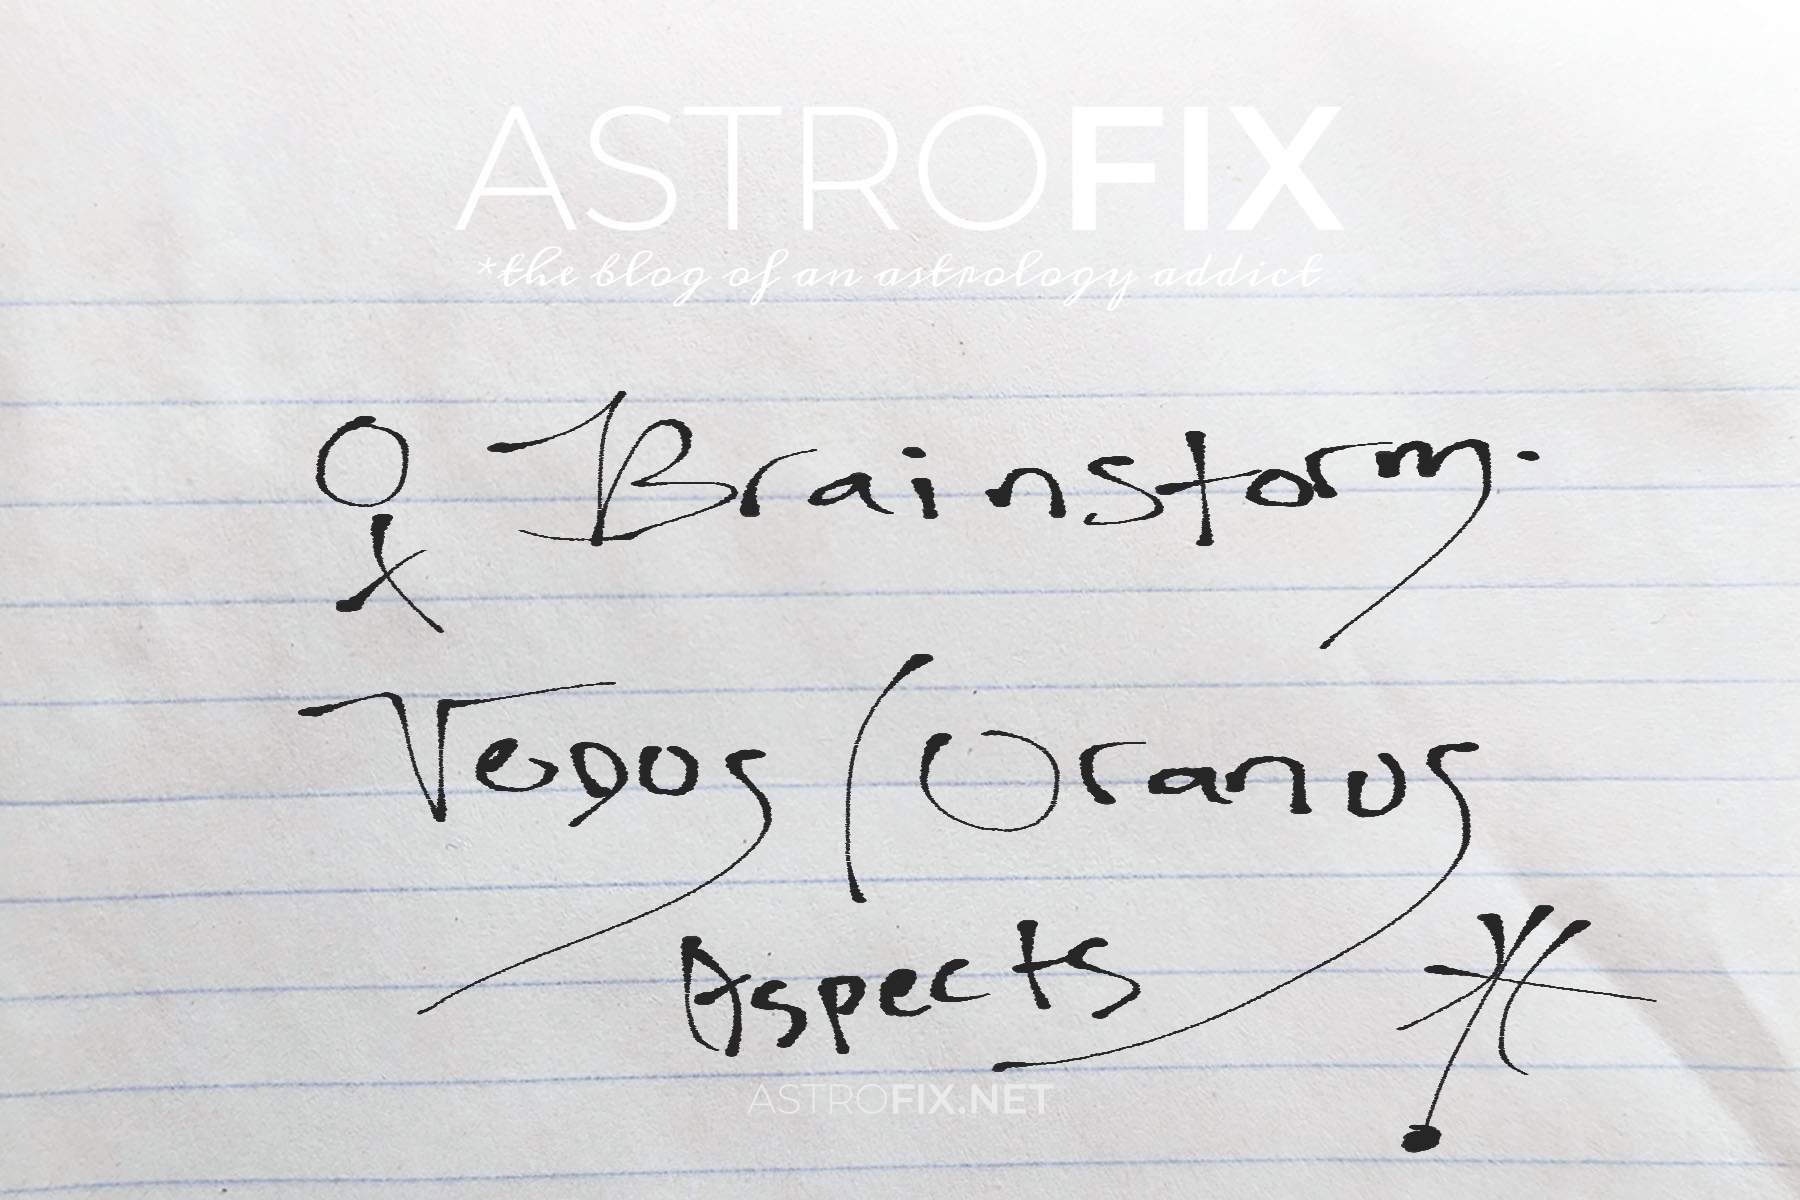 brainstorm-venus-uranus-astrology-aspects